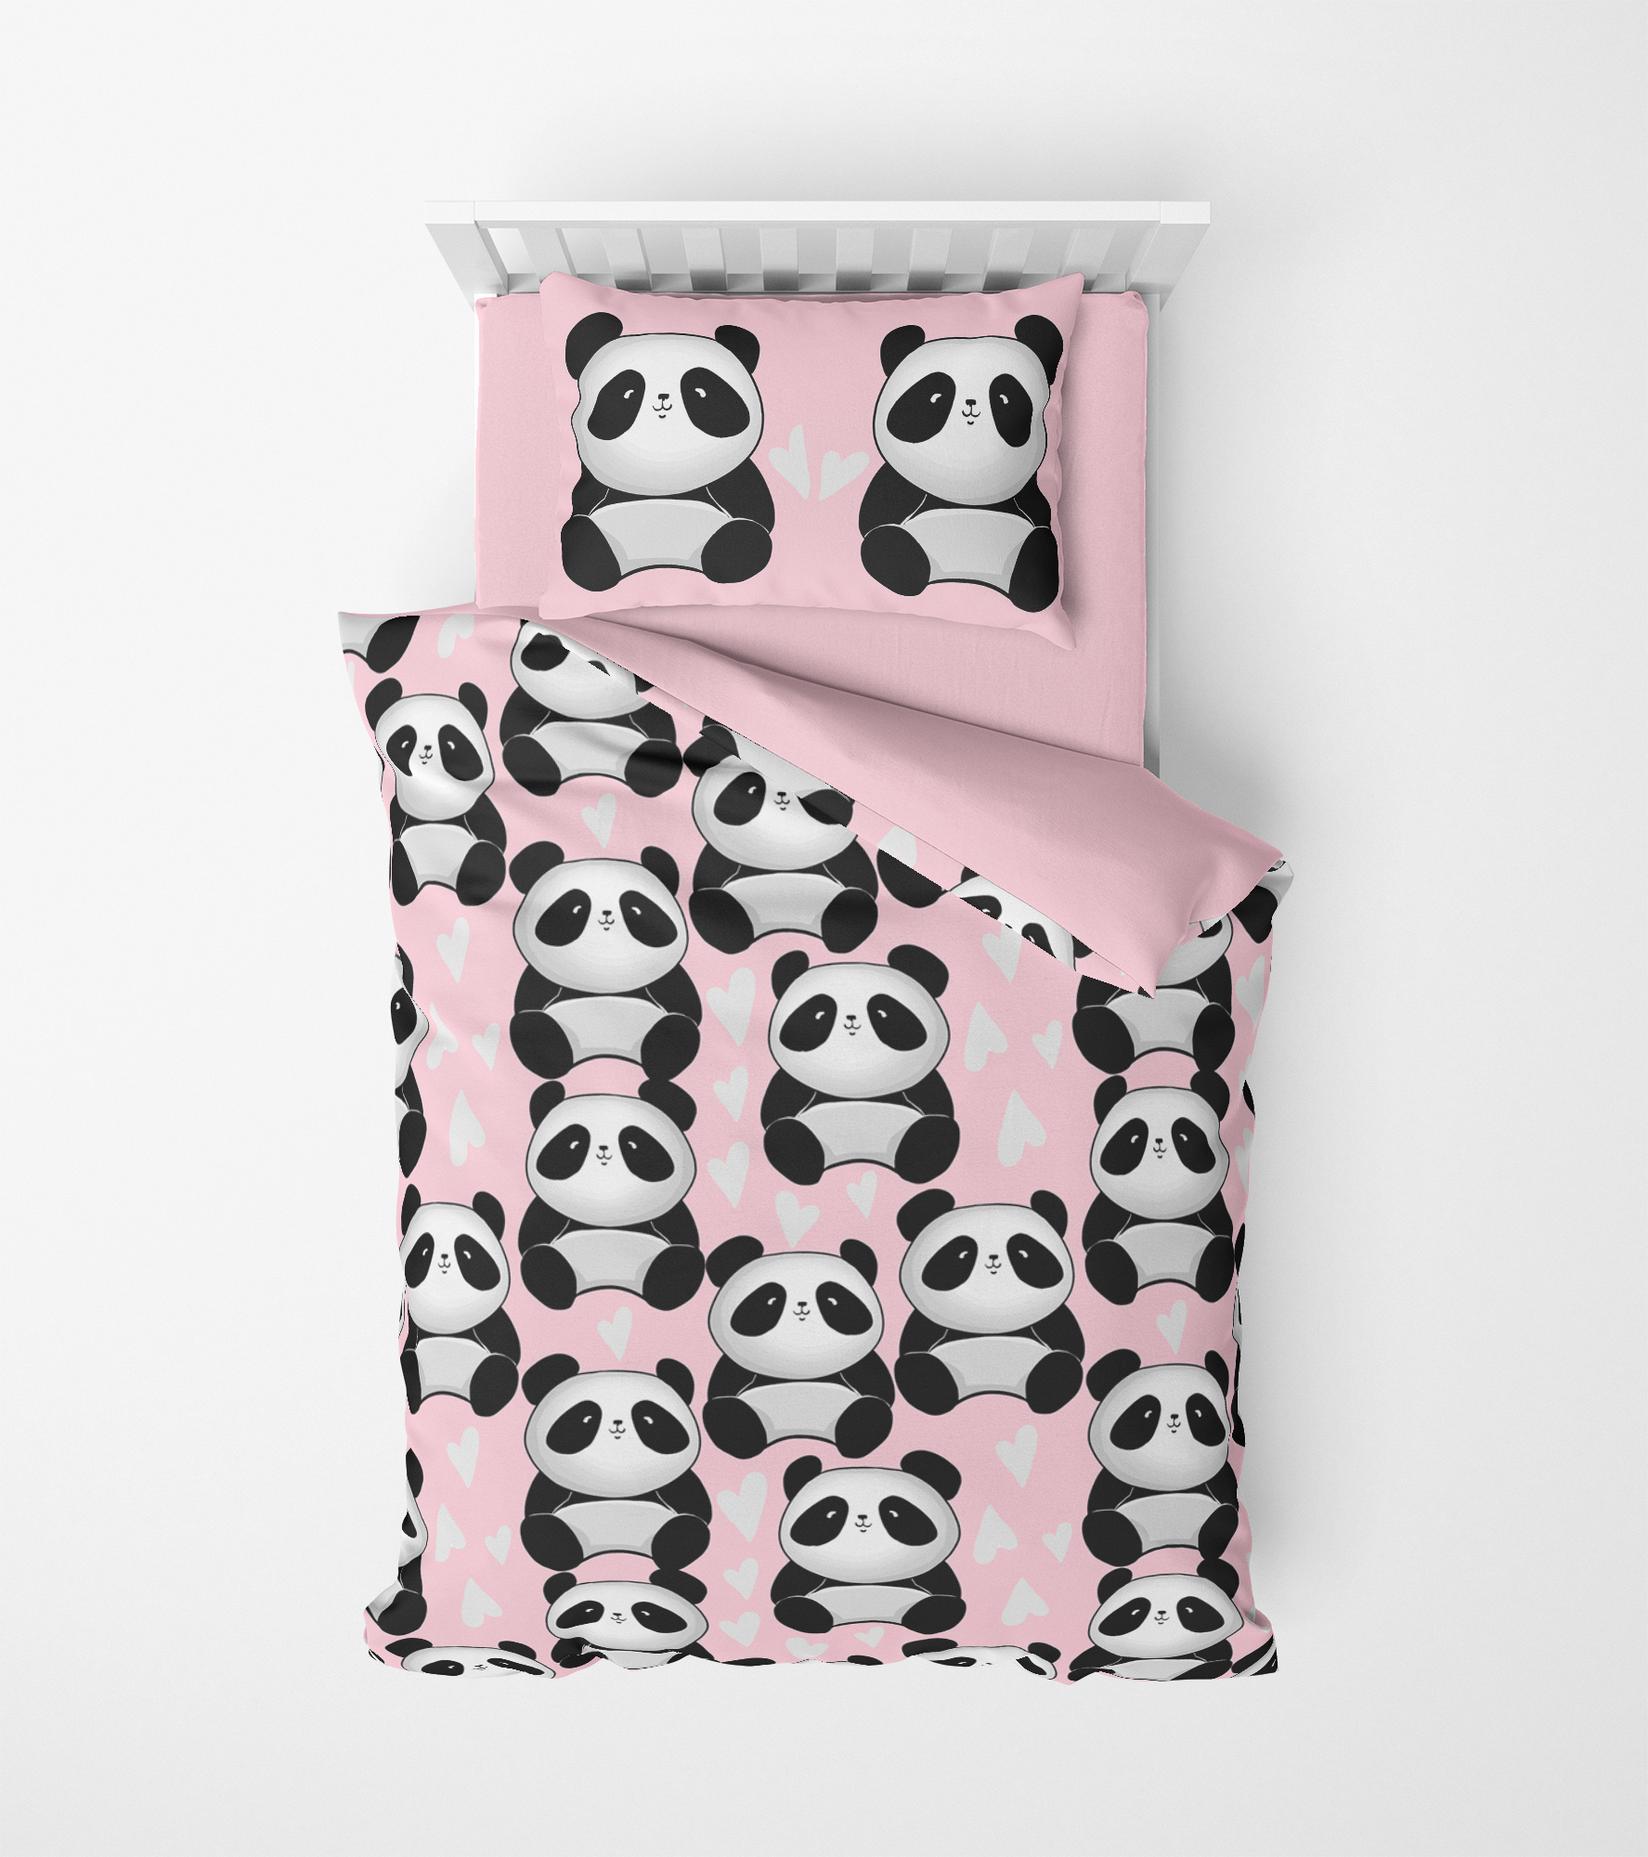 MEY HOME Posteljina sa panda motivom 3D 160x220cm roze